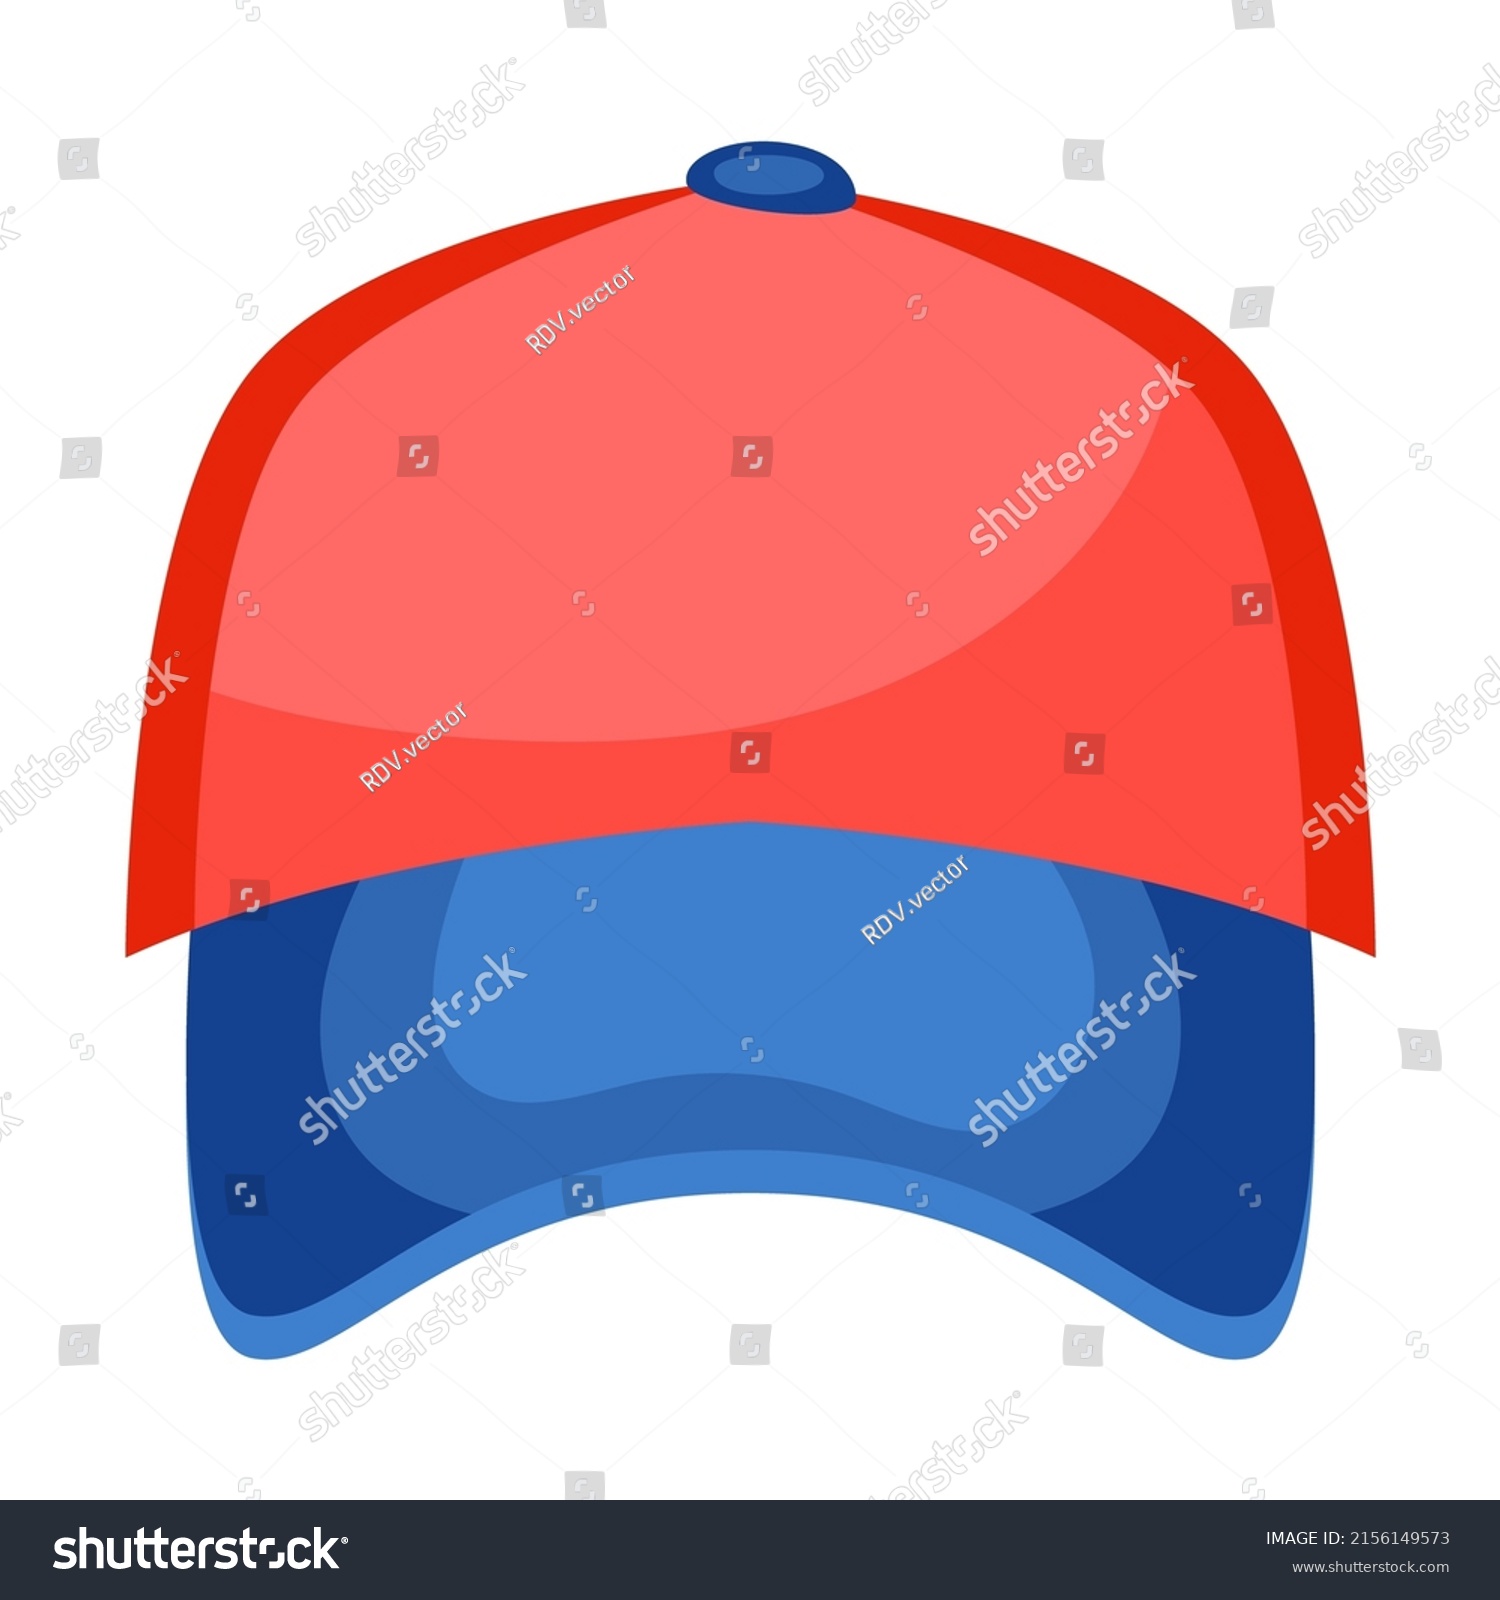 1,082 Red baseball cap cartoon Images, Stock Photos & Vectors ...